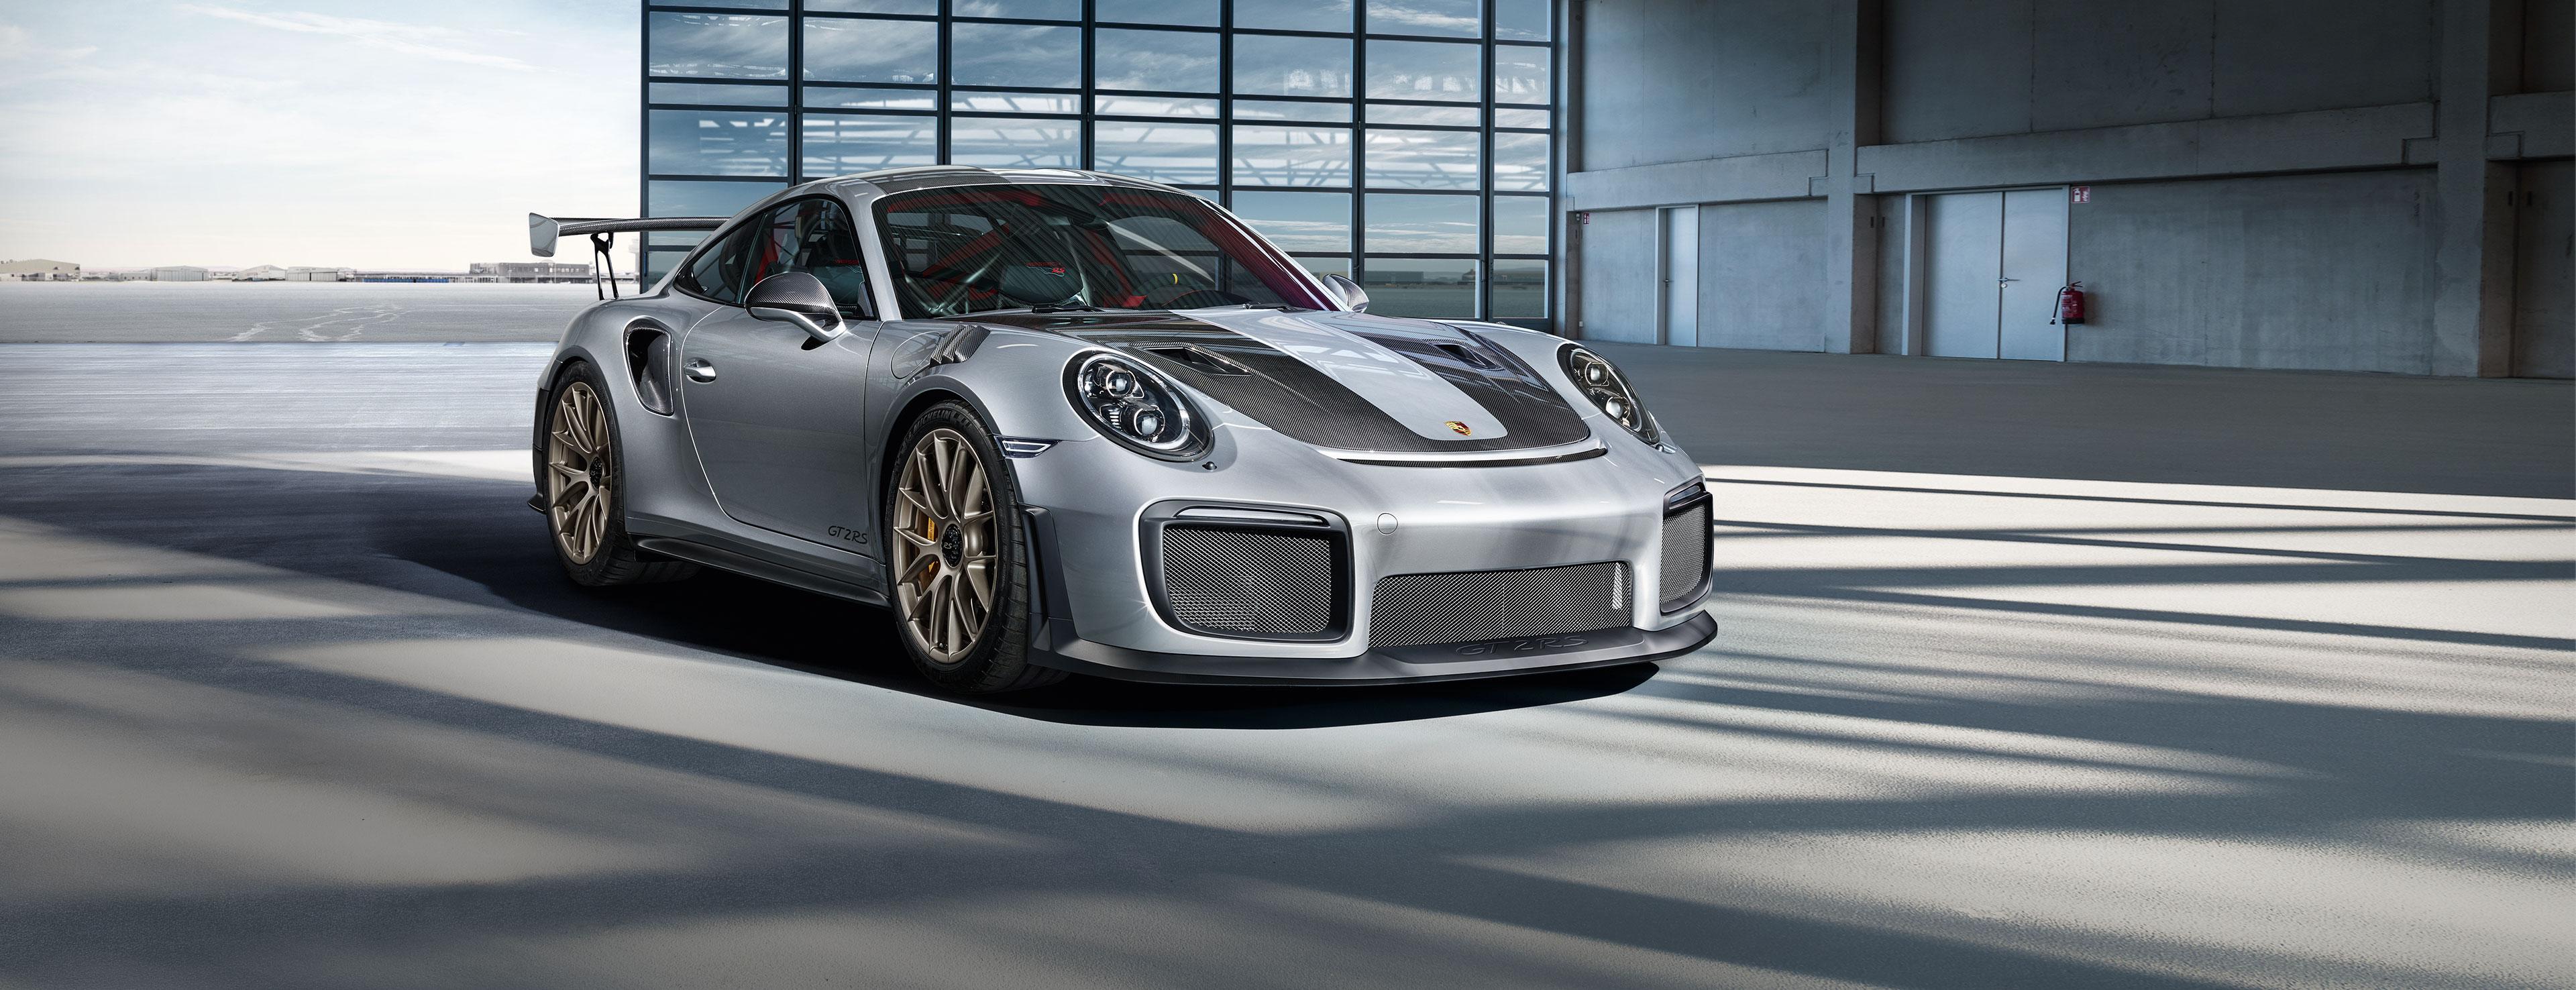 Ko vozi skupocjeni Porsche 911 od pola miliona maraka